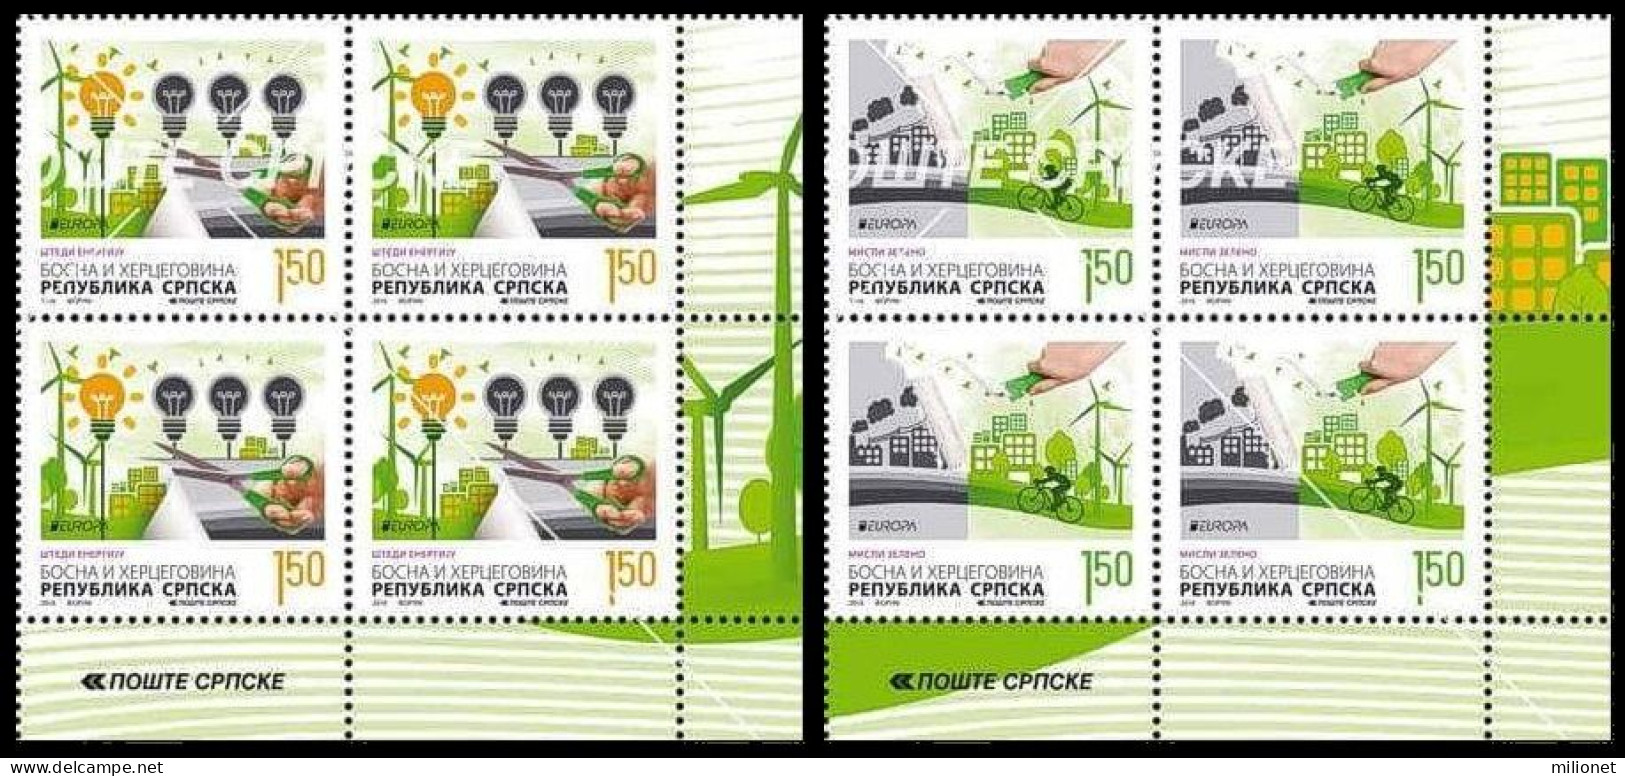 SALE!!! BOSNIA HERZEGOVINA SERBIA SERB POST PALE BOSNIE BOSNIEN 2016 EUROPA CEPT THINK GREEN 2 Blocks Of 4 Stamps ** - 2016